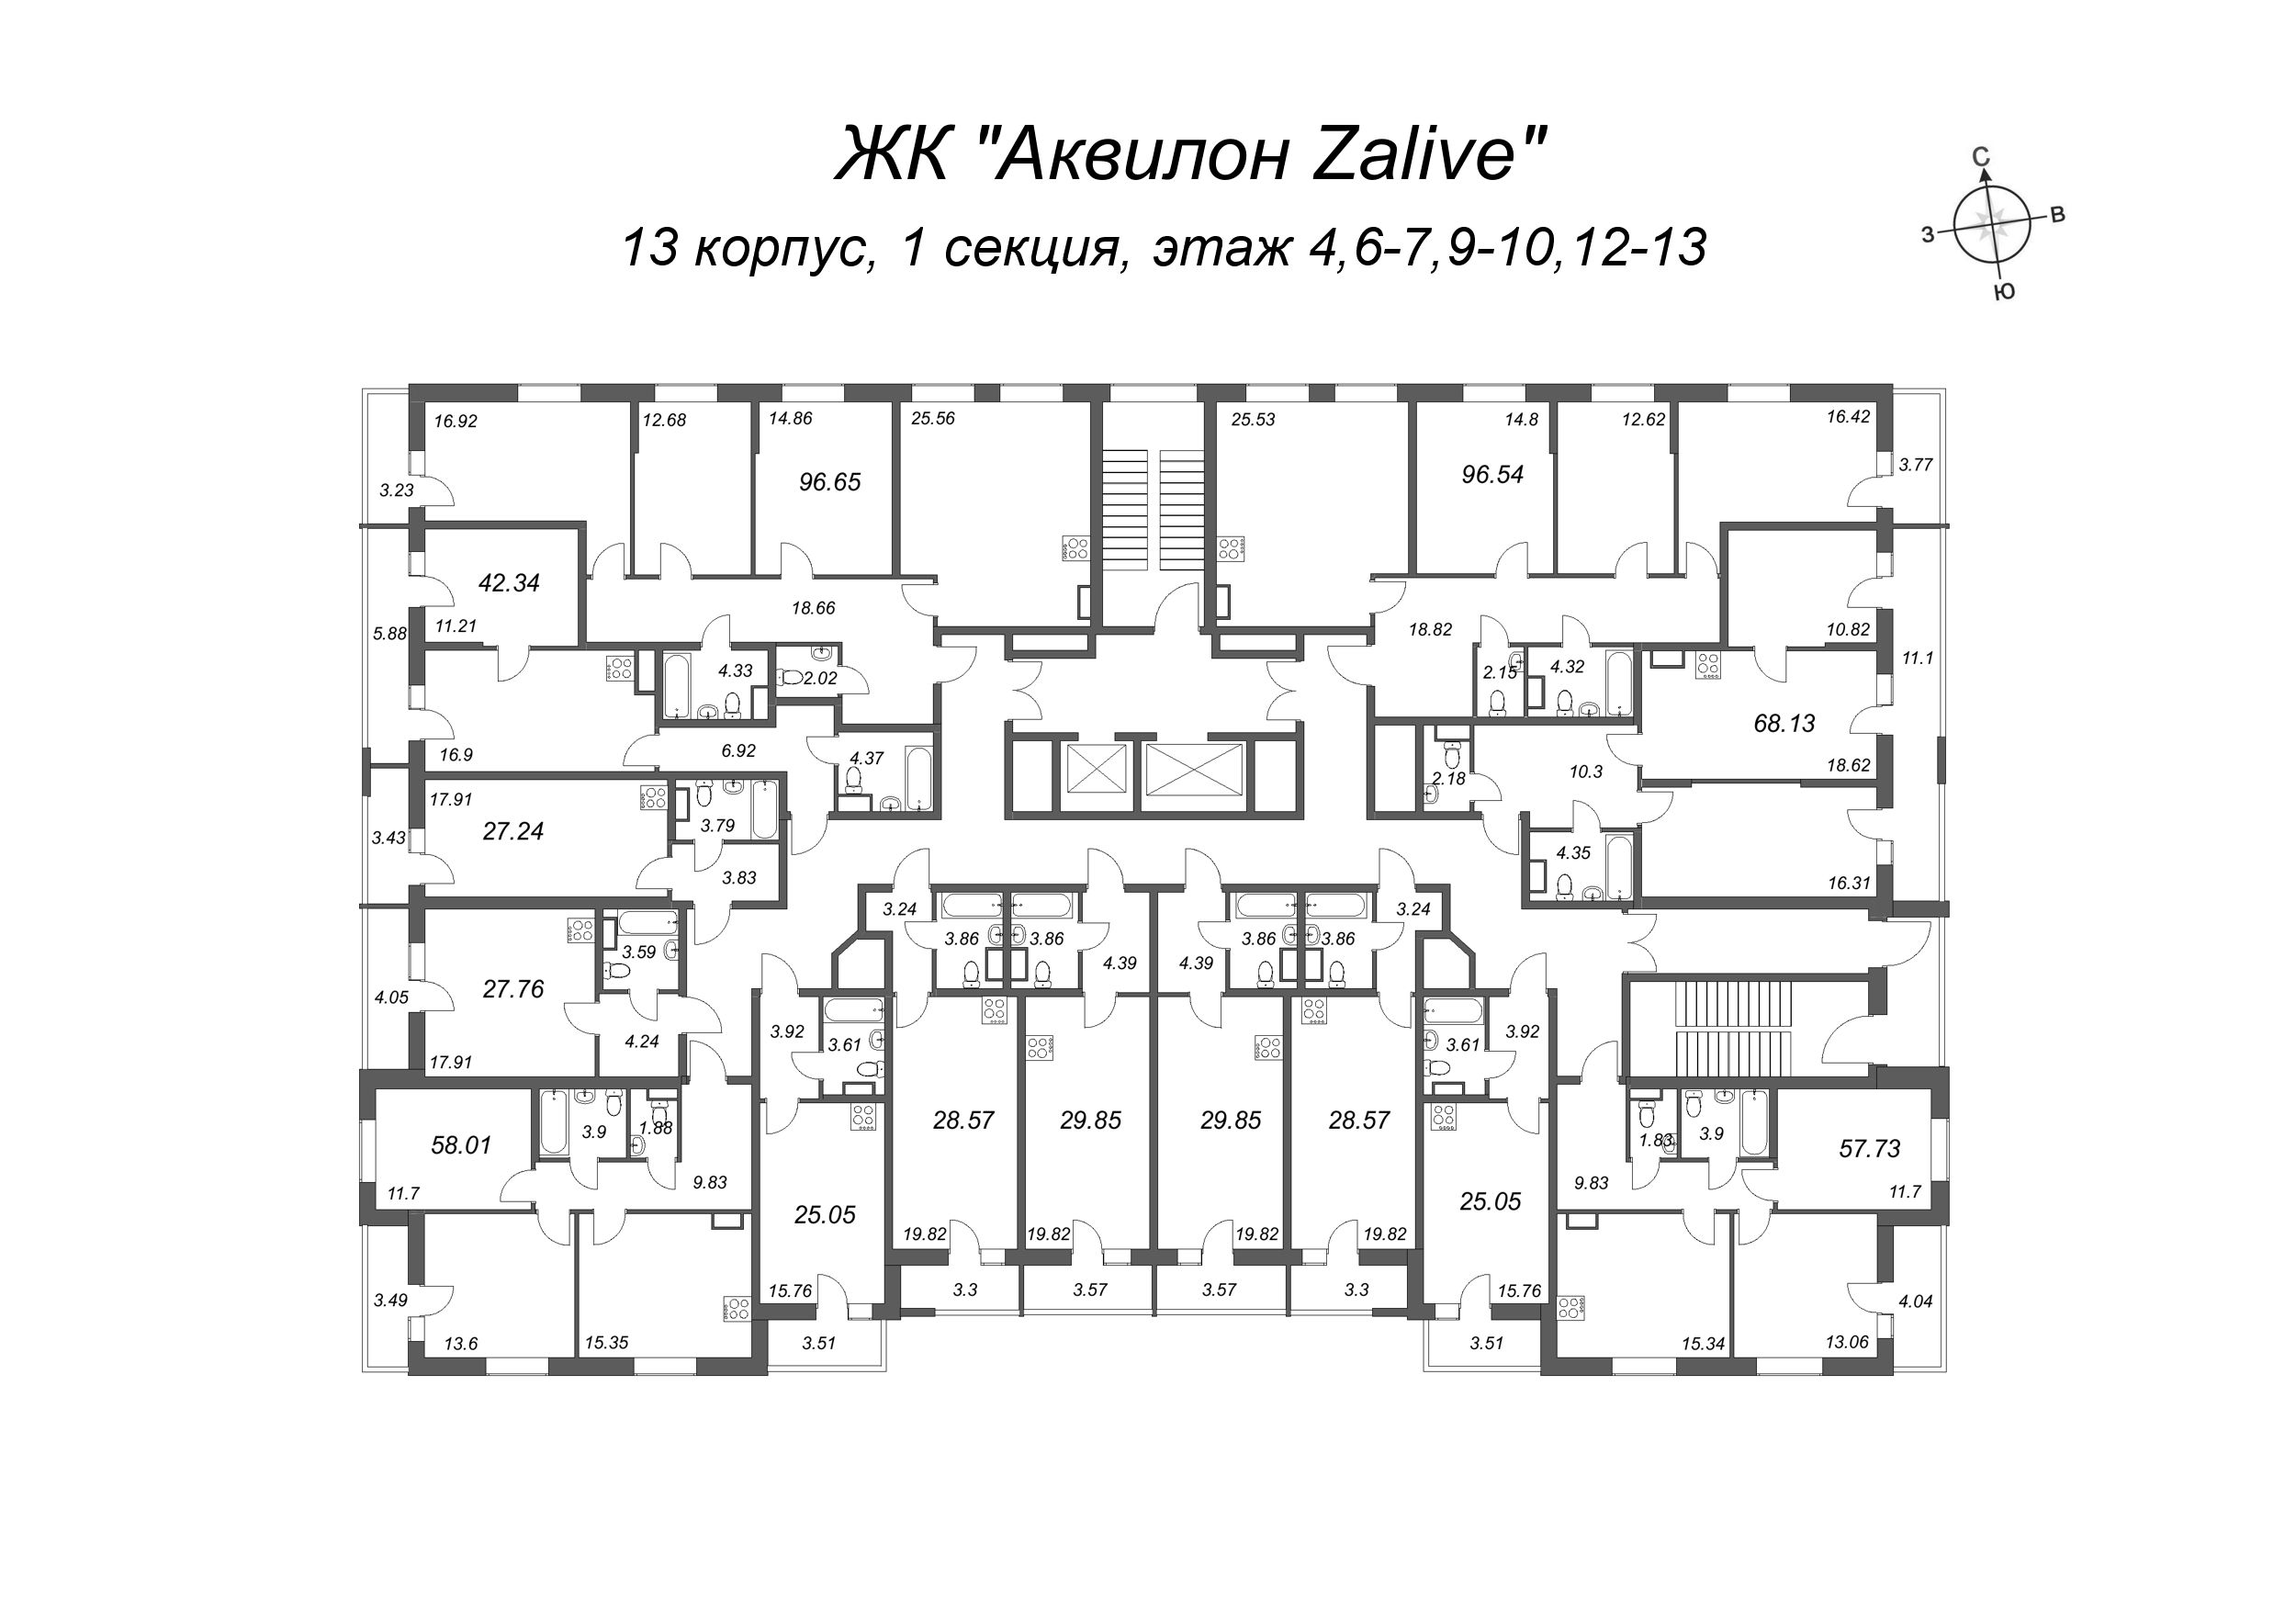 3-комнатная (Евро) квартира, 57.73 м² - планировка этажа